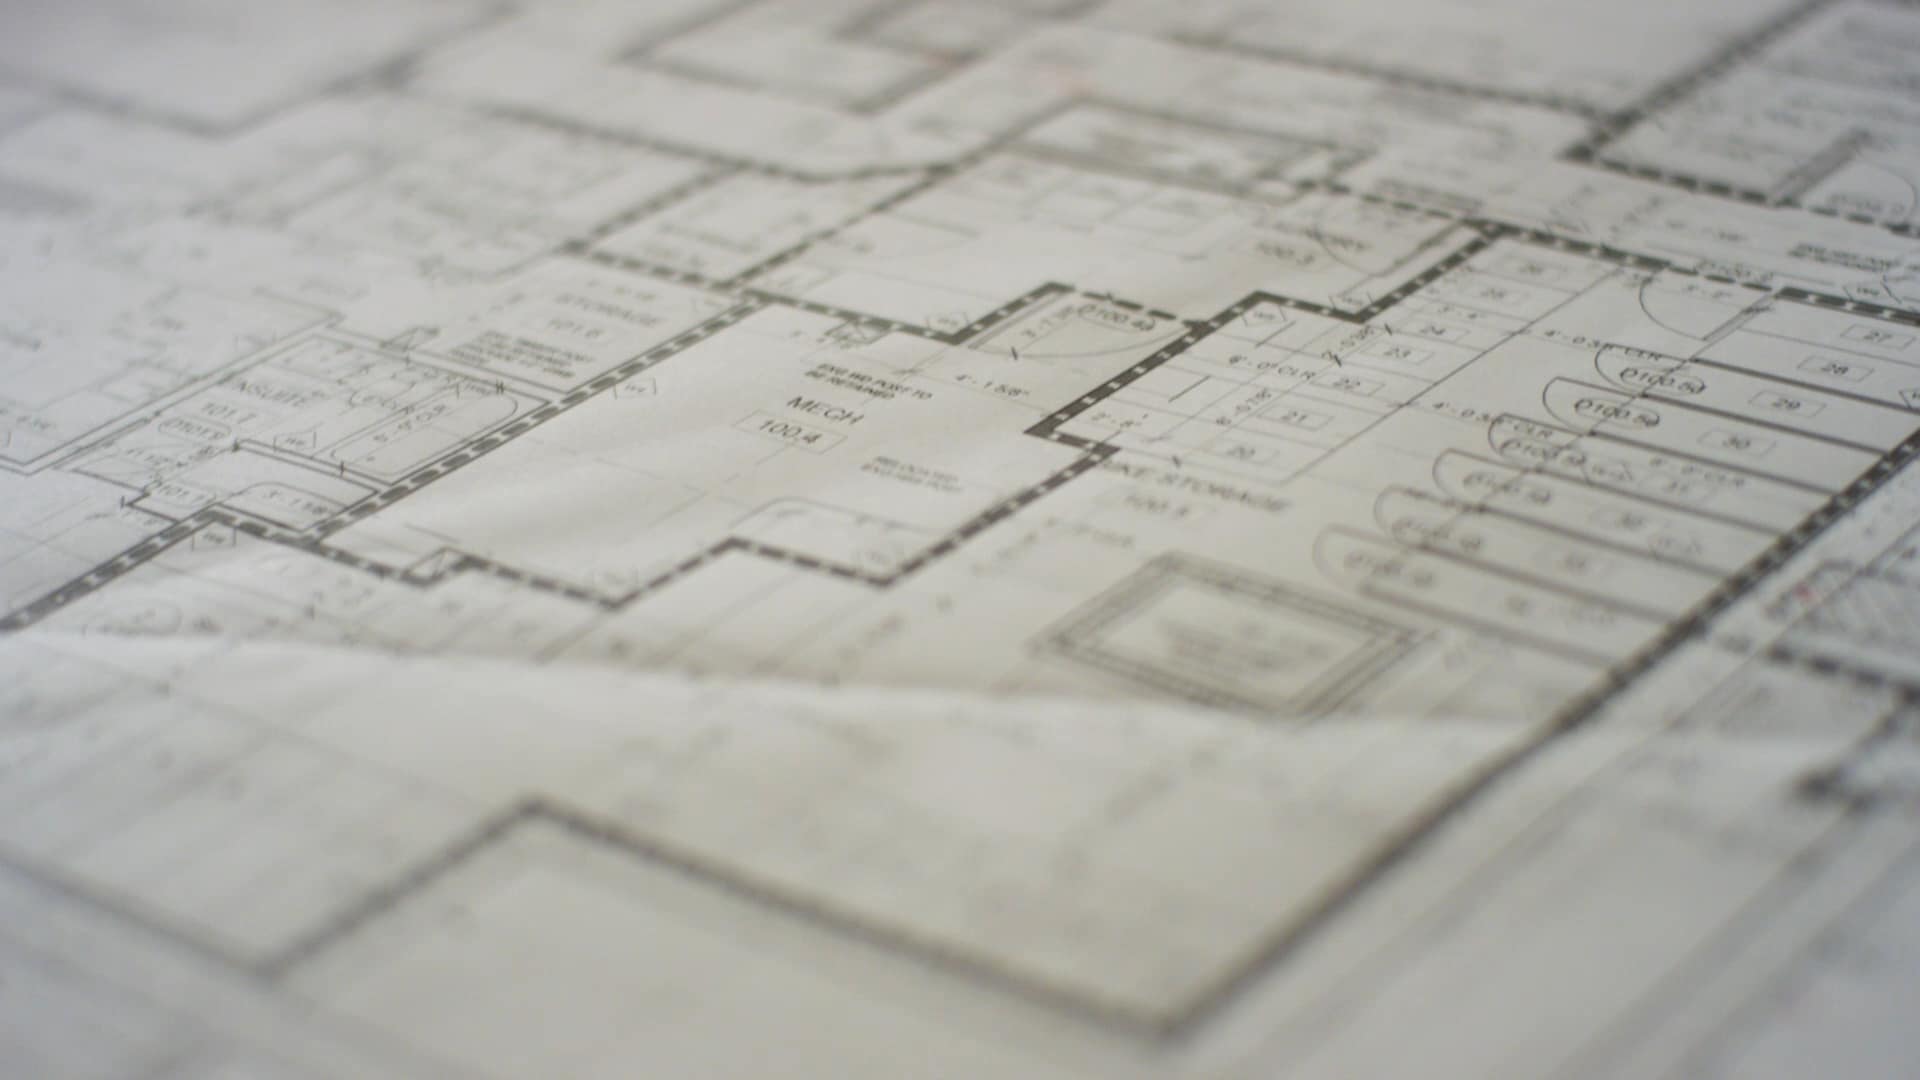 Construction Blueprint Wallpapers